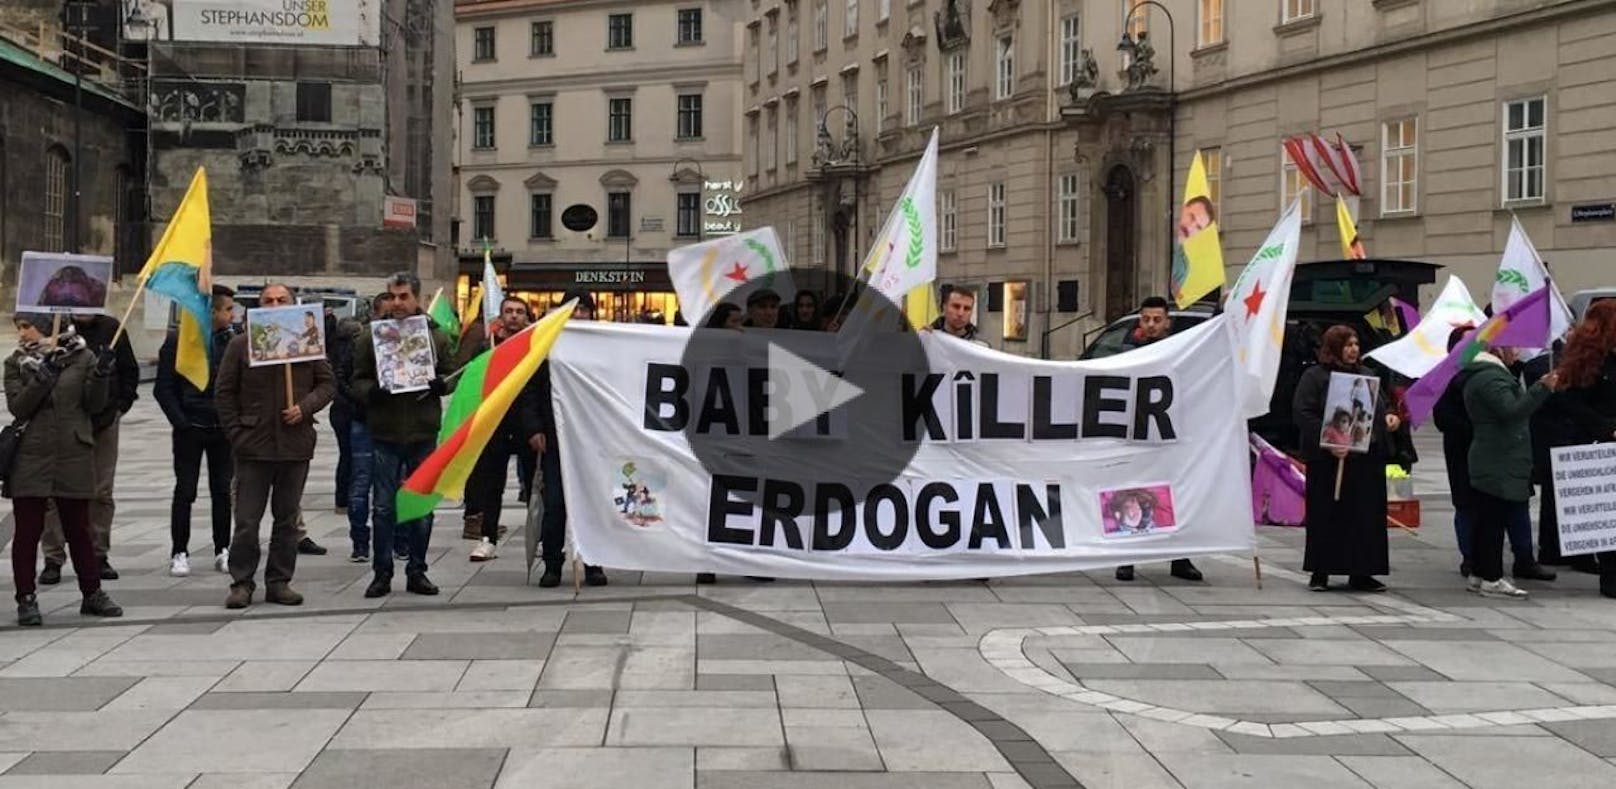 Demo in Wiener City gegen "Kinder-Mörder" Erdogan